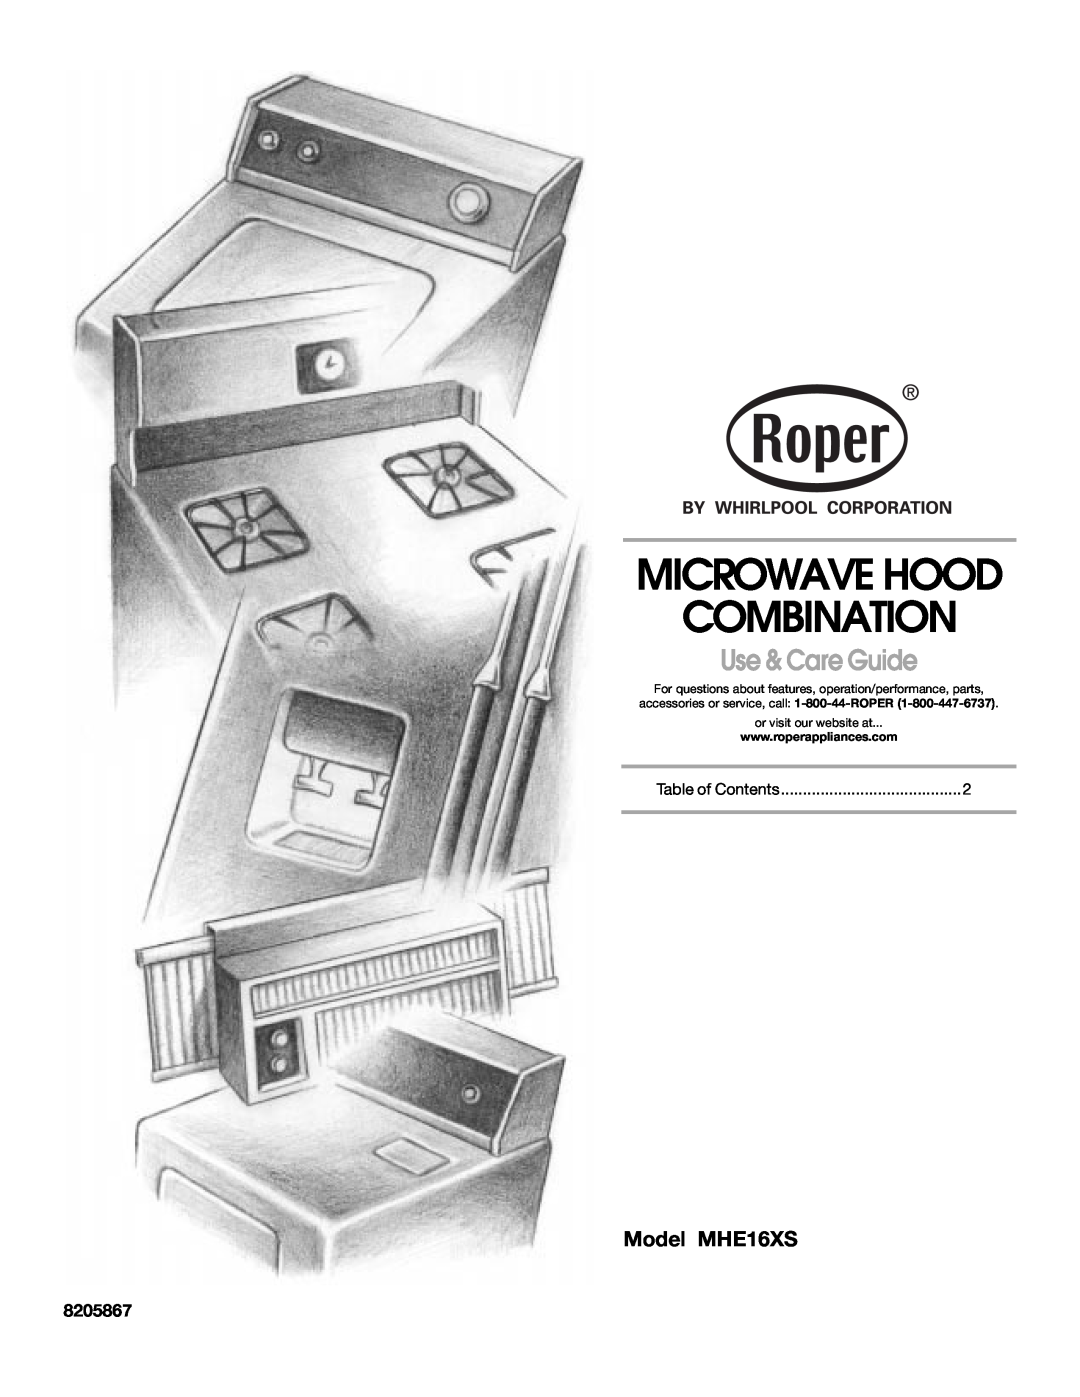 Whirlpool manual Microwave Hood Combination, Use & Care Guide, Model MHE16XS 